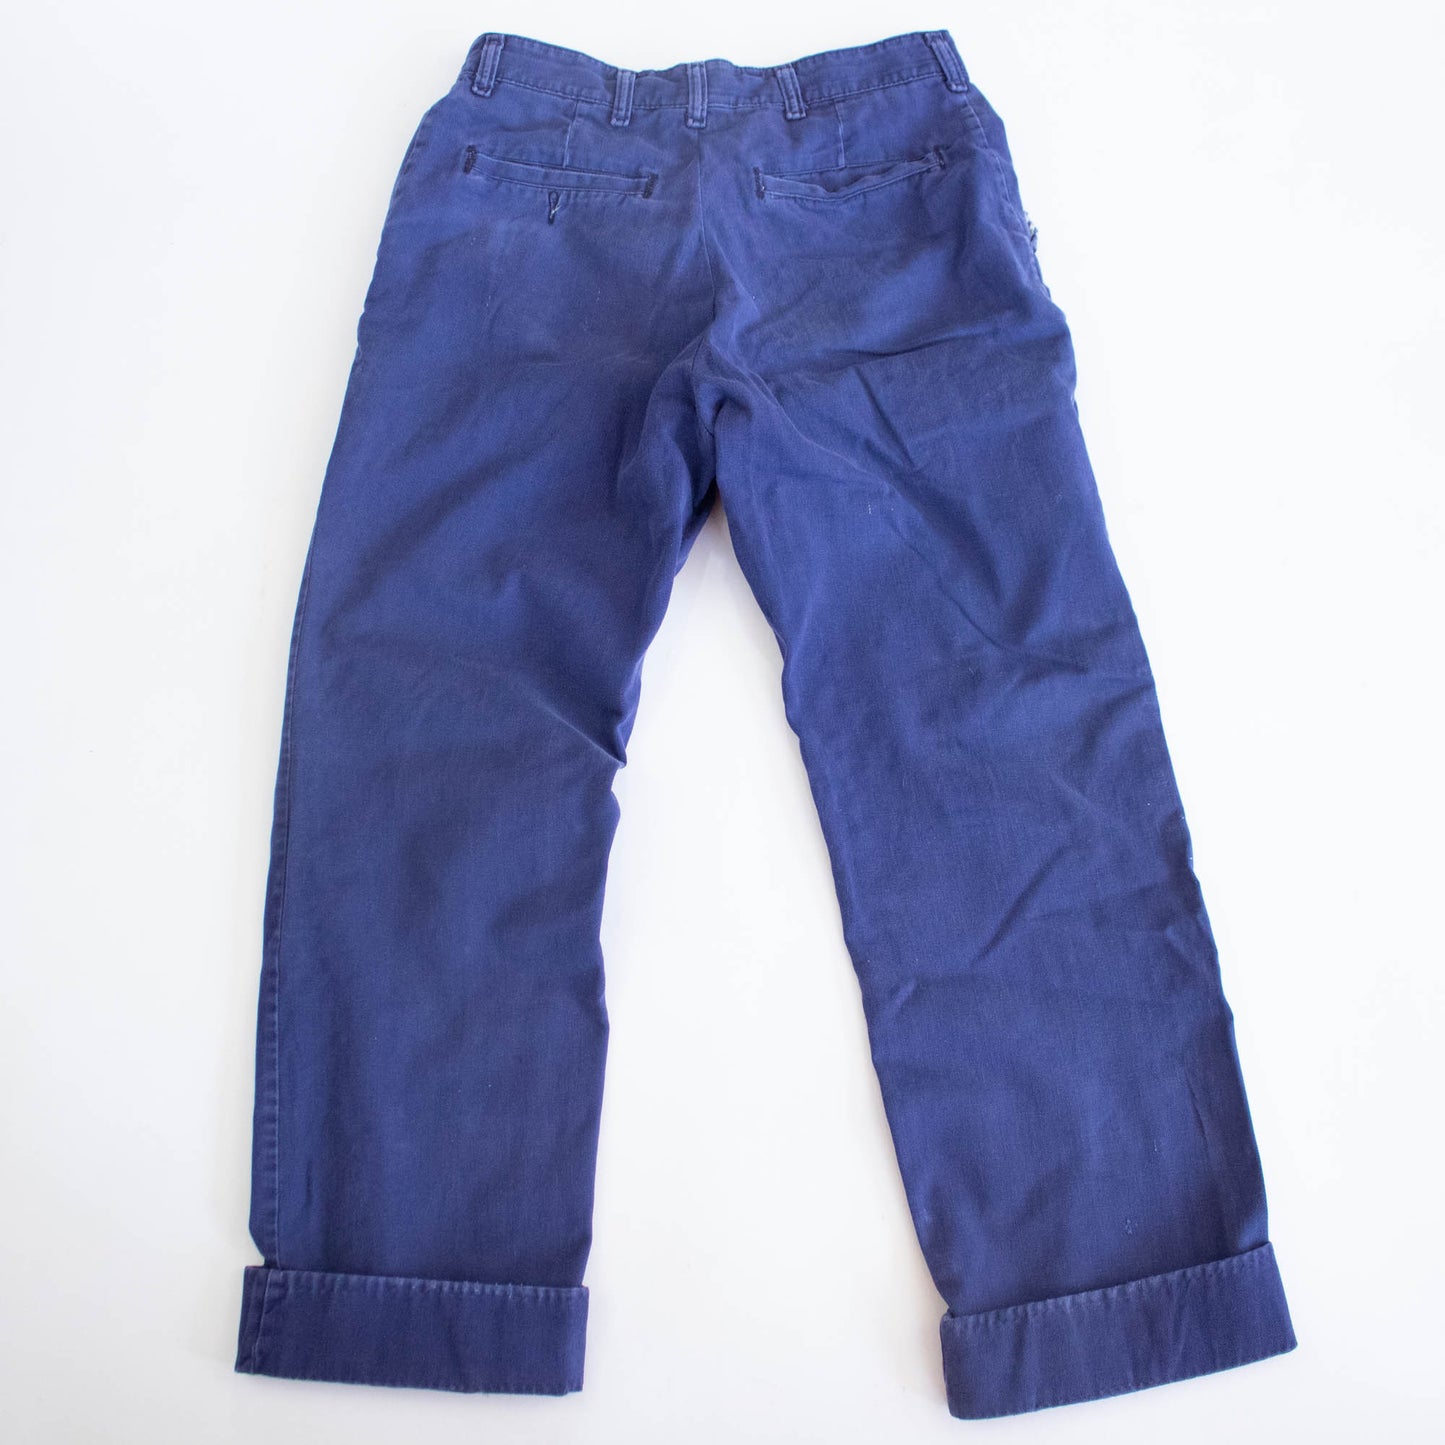 Blue Work Pants